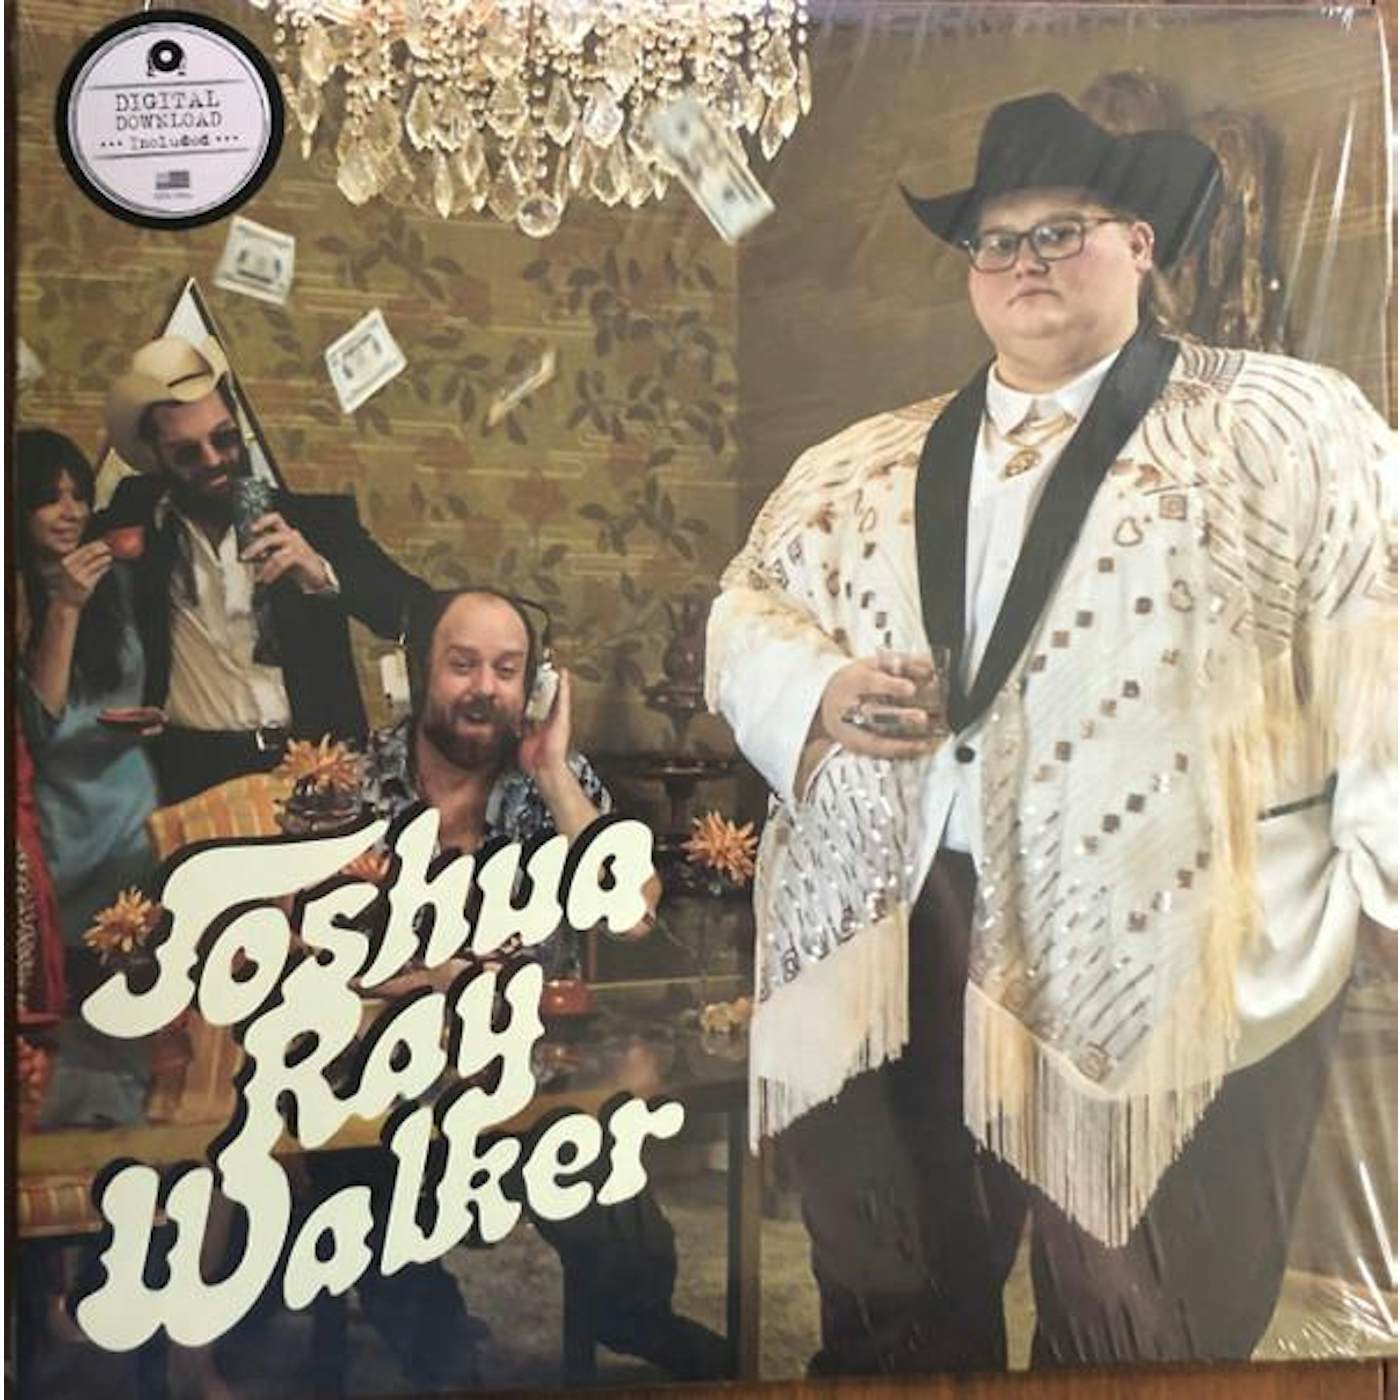 Joshua Ray Walker Glad You Made It Vinyl Record